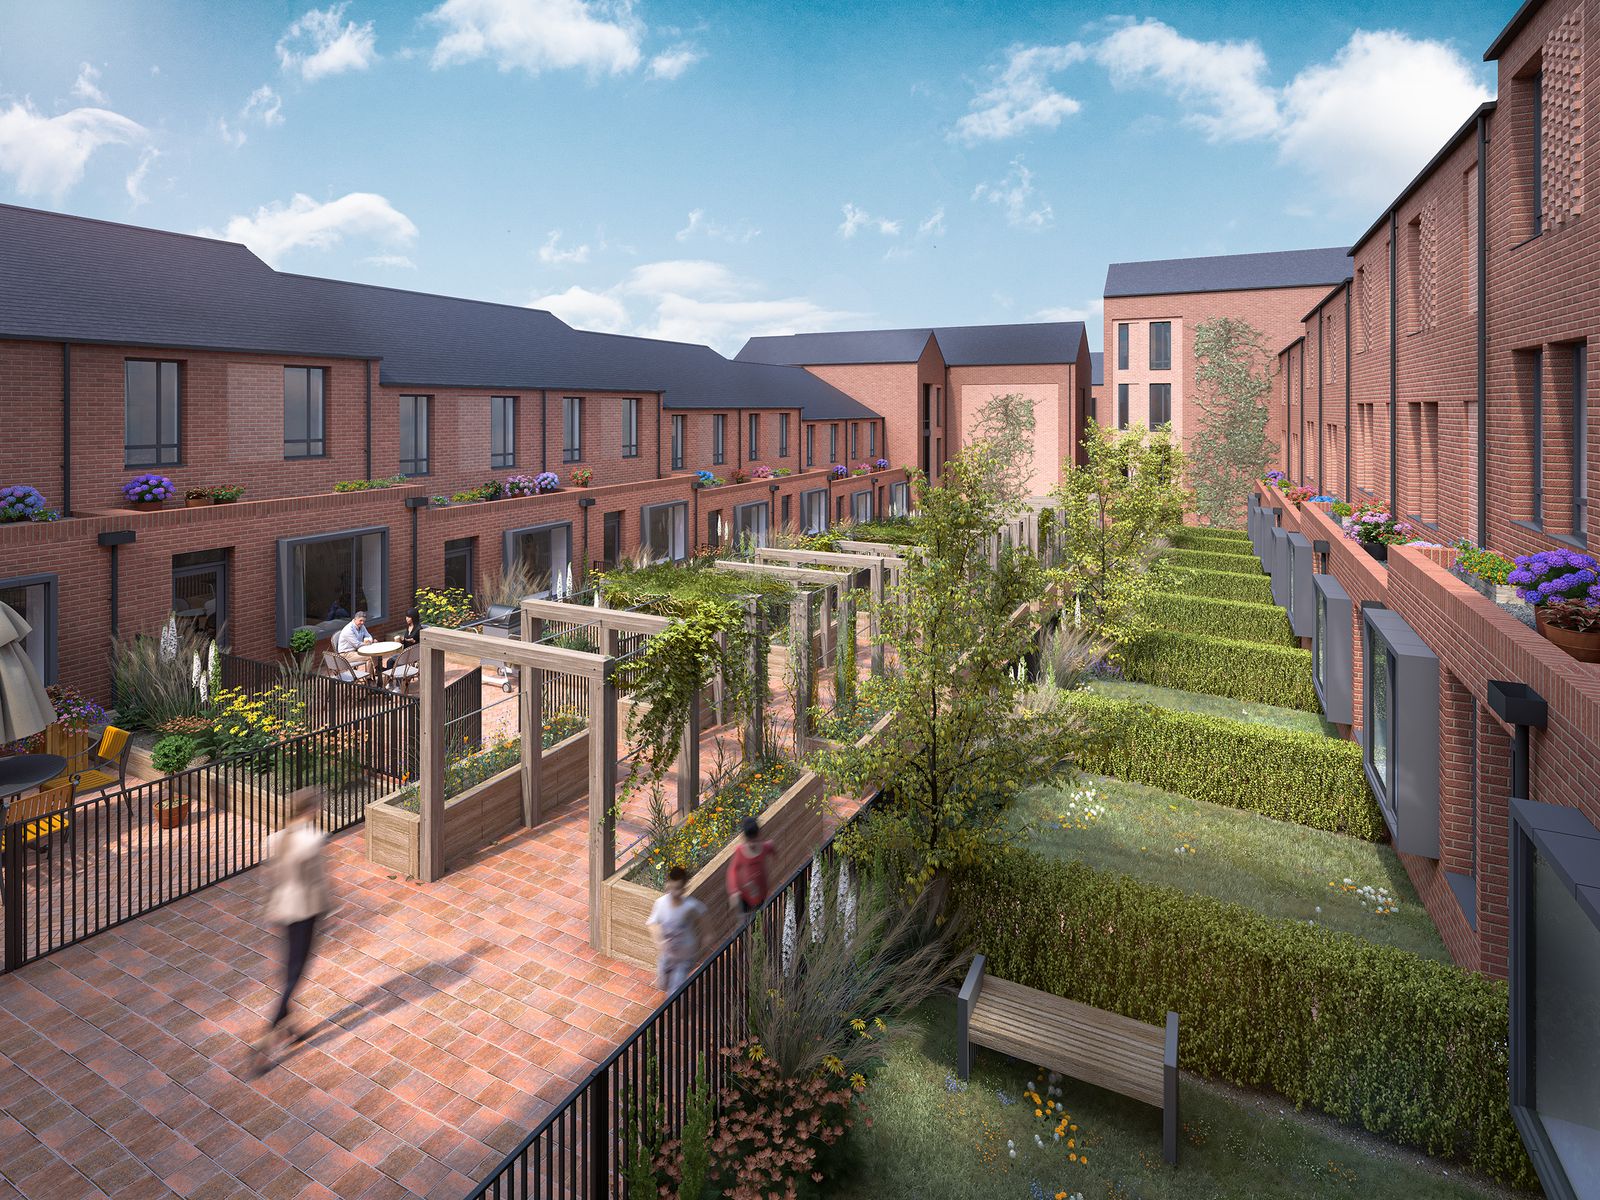 Urban regeneration specialist artisan real estate launches in Leeds